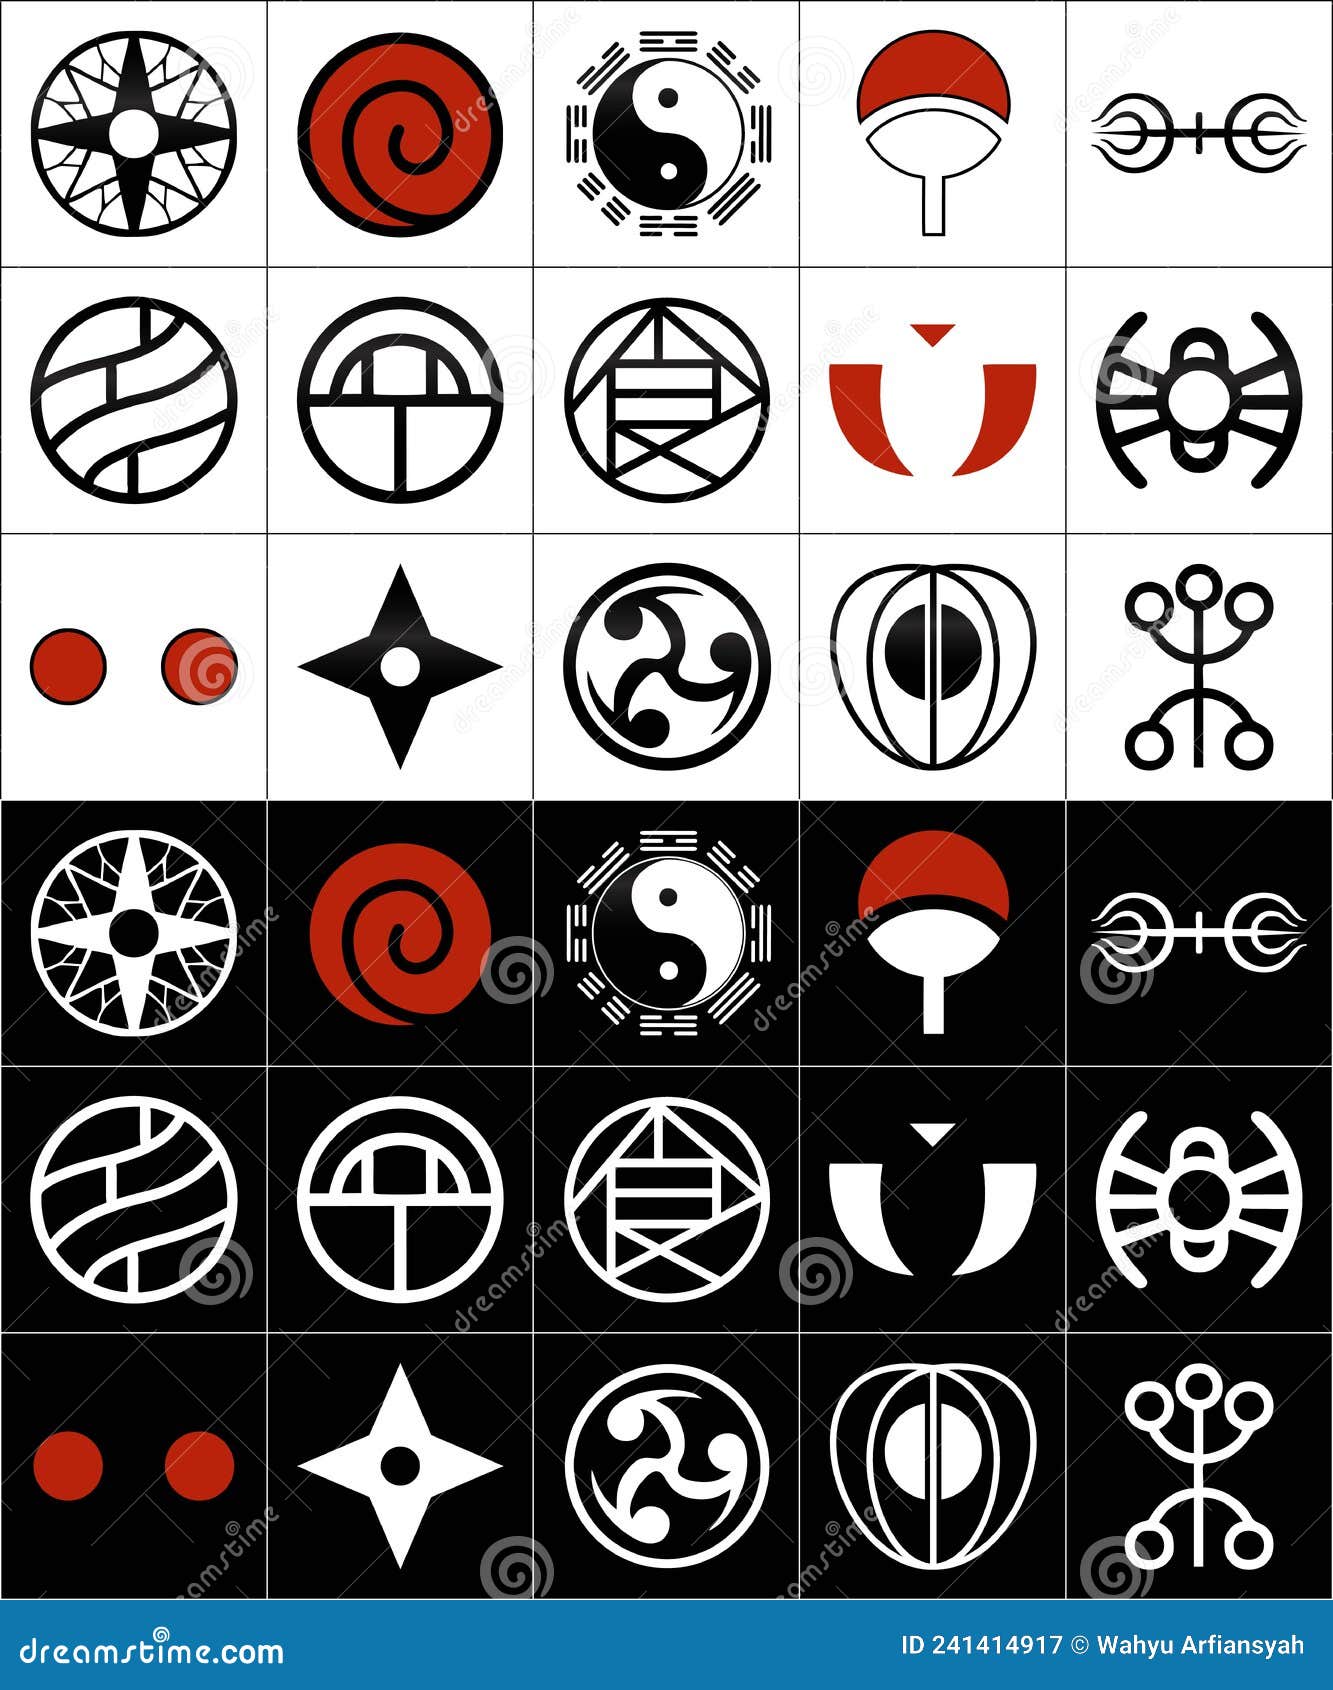 All naruto clan symbols